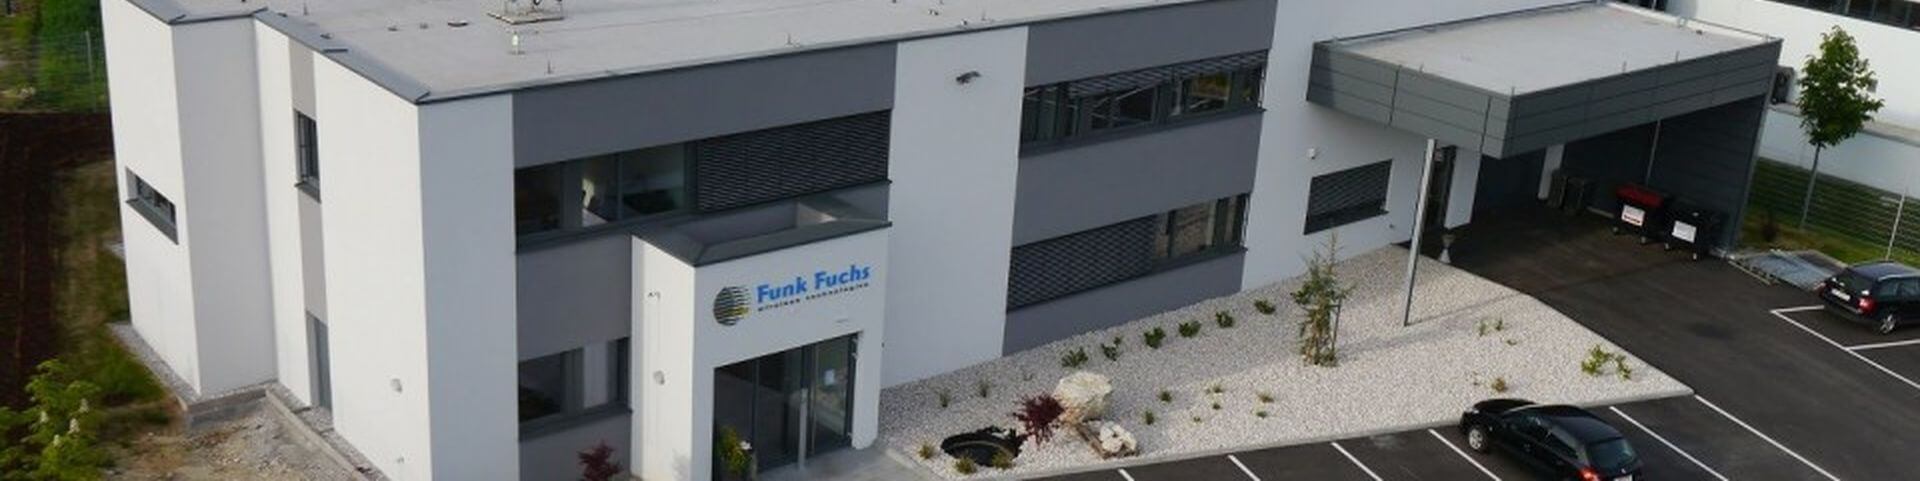 Titelbild von Lehrbetrieb Funk Fuchs GmbH & Co KG auf Lehrlingsportal.at